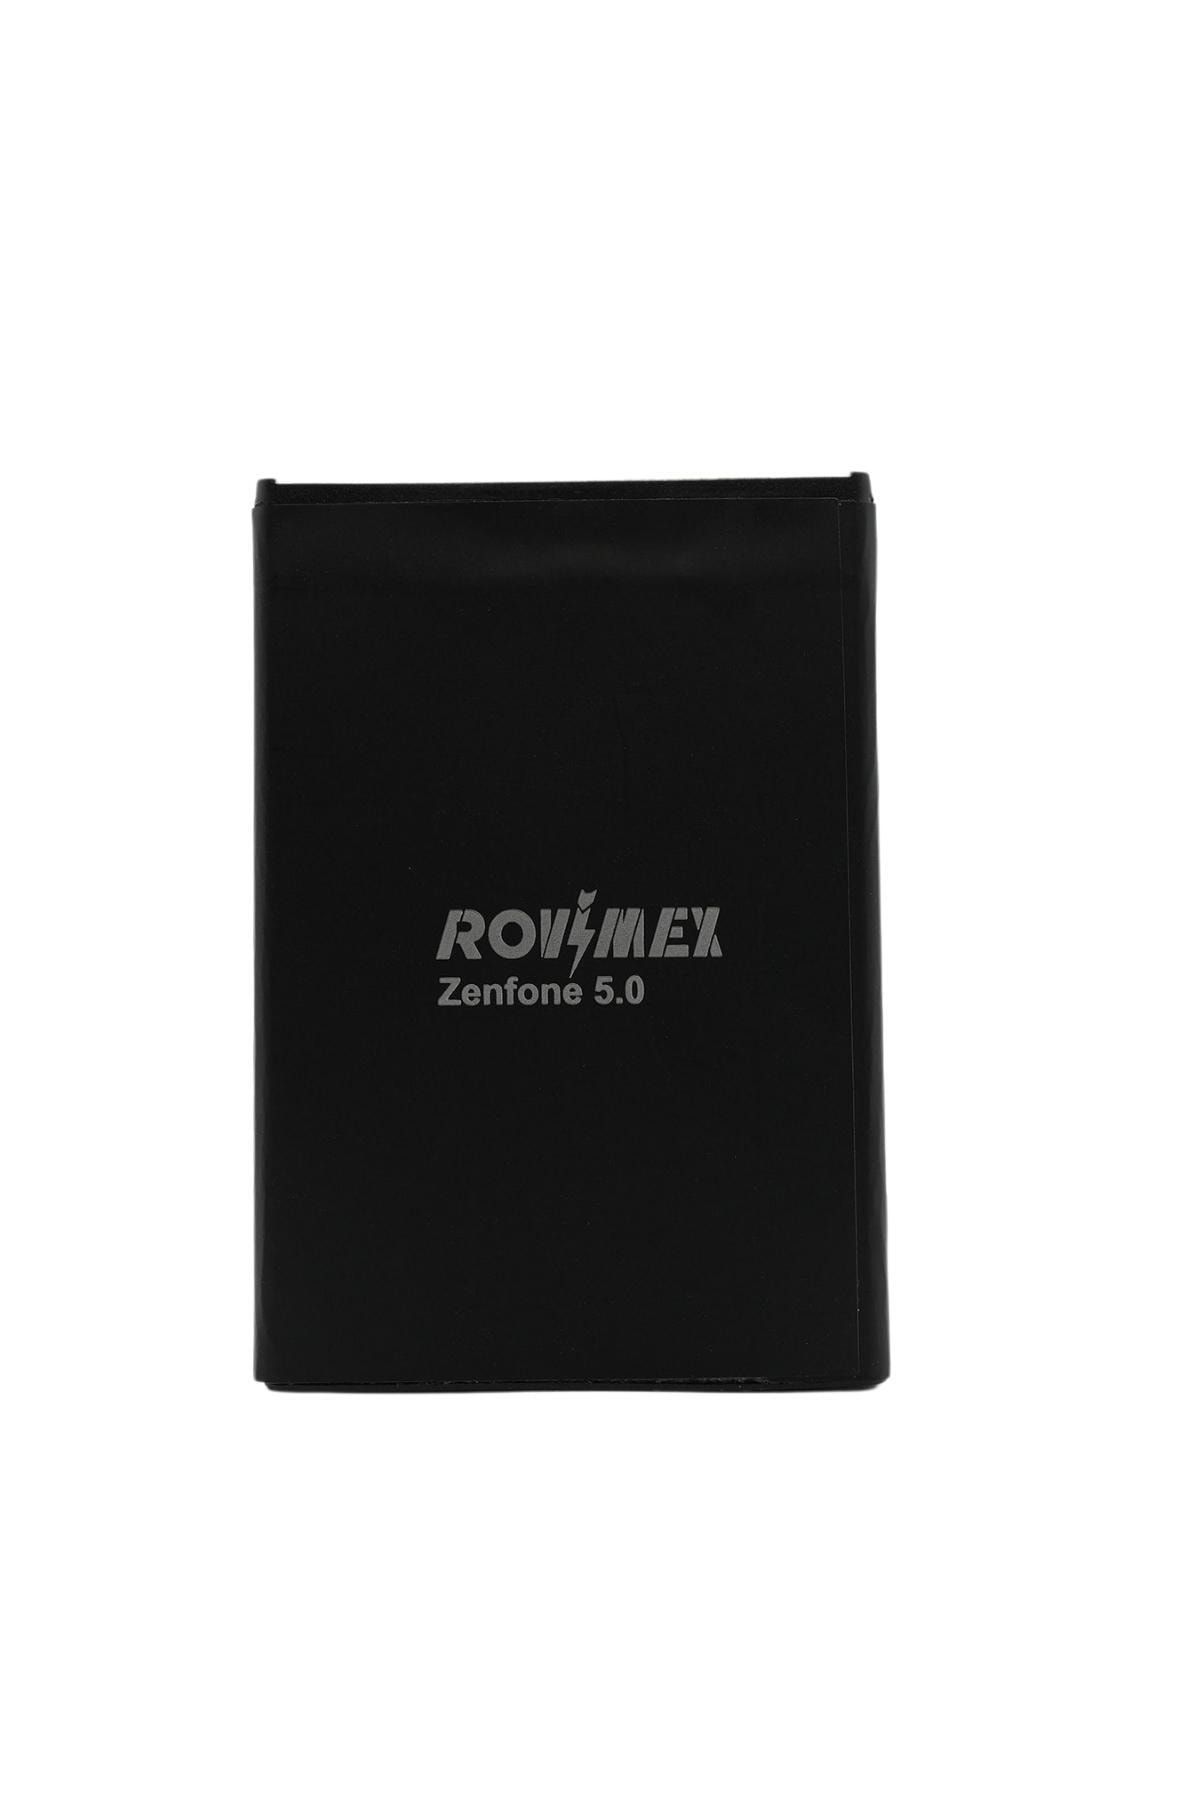 Rovimex Asus Zenfone 5 (ze620kl) Batarya Pil